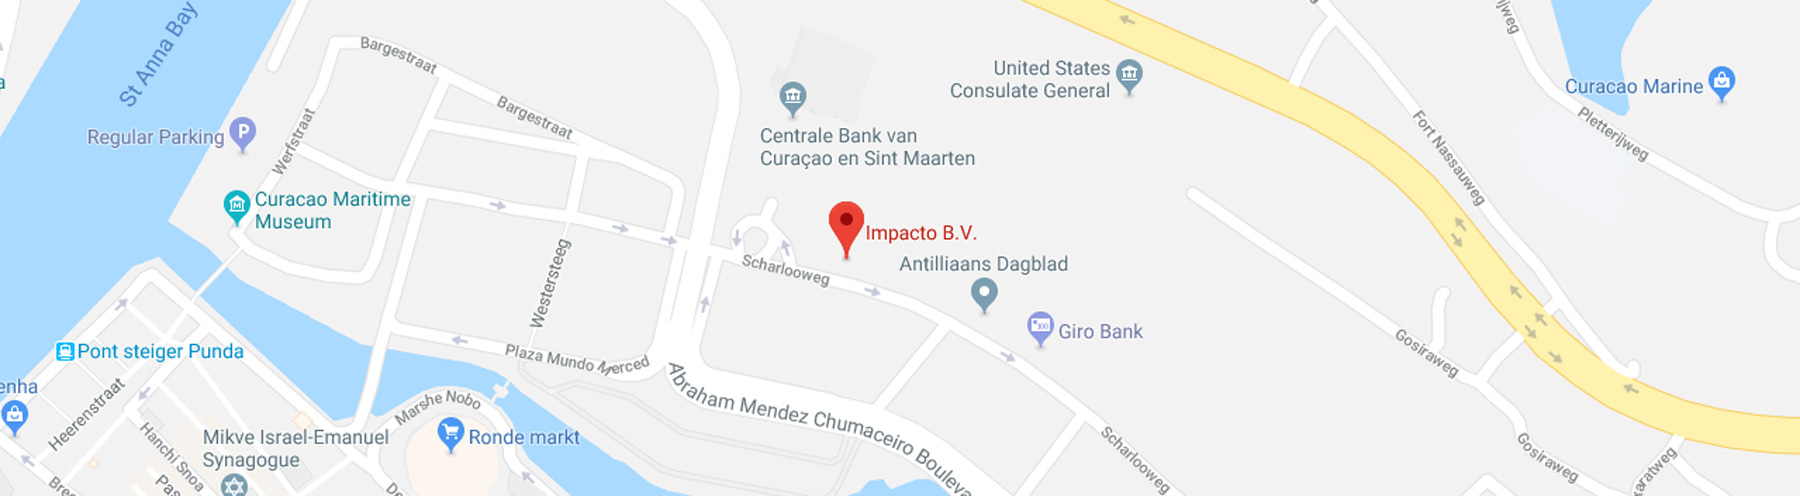 Routebeschrijving Google Maps | Impacto